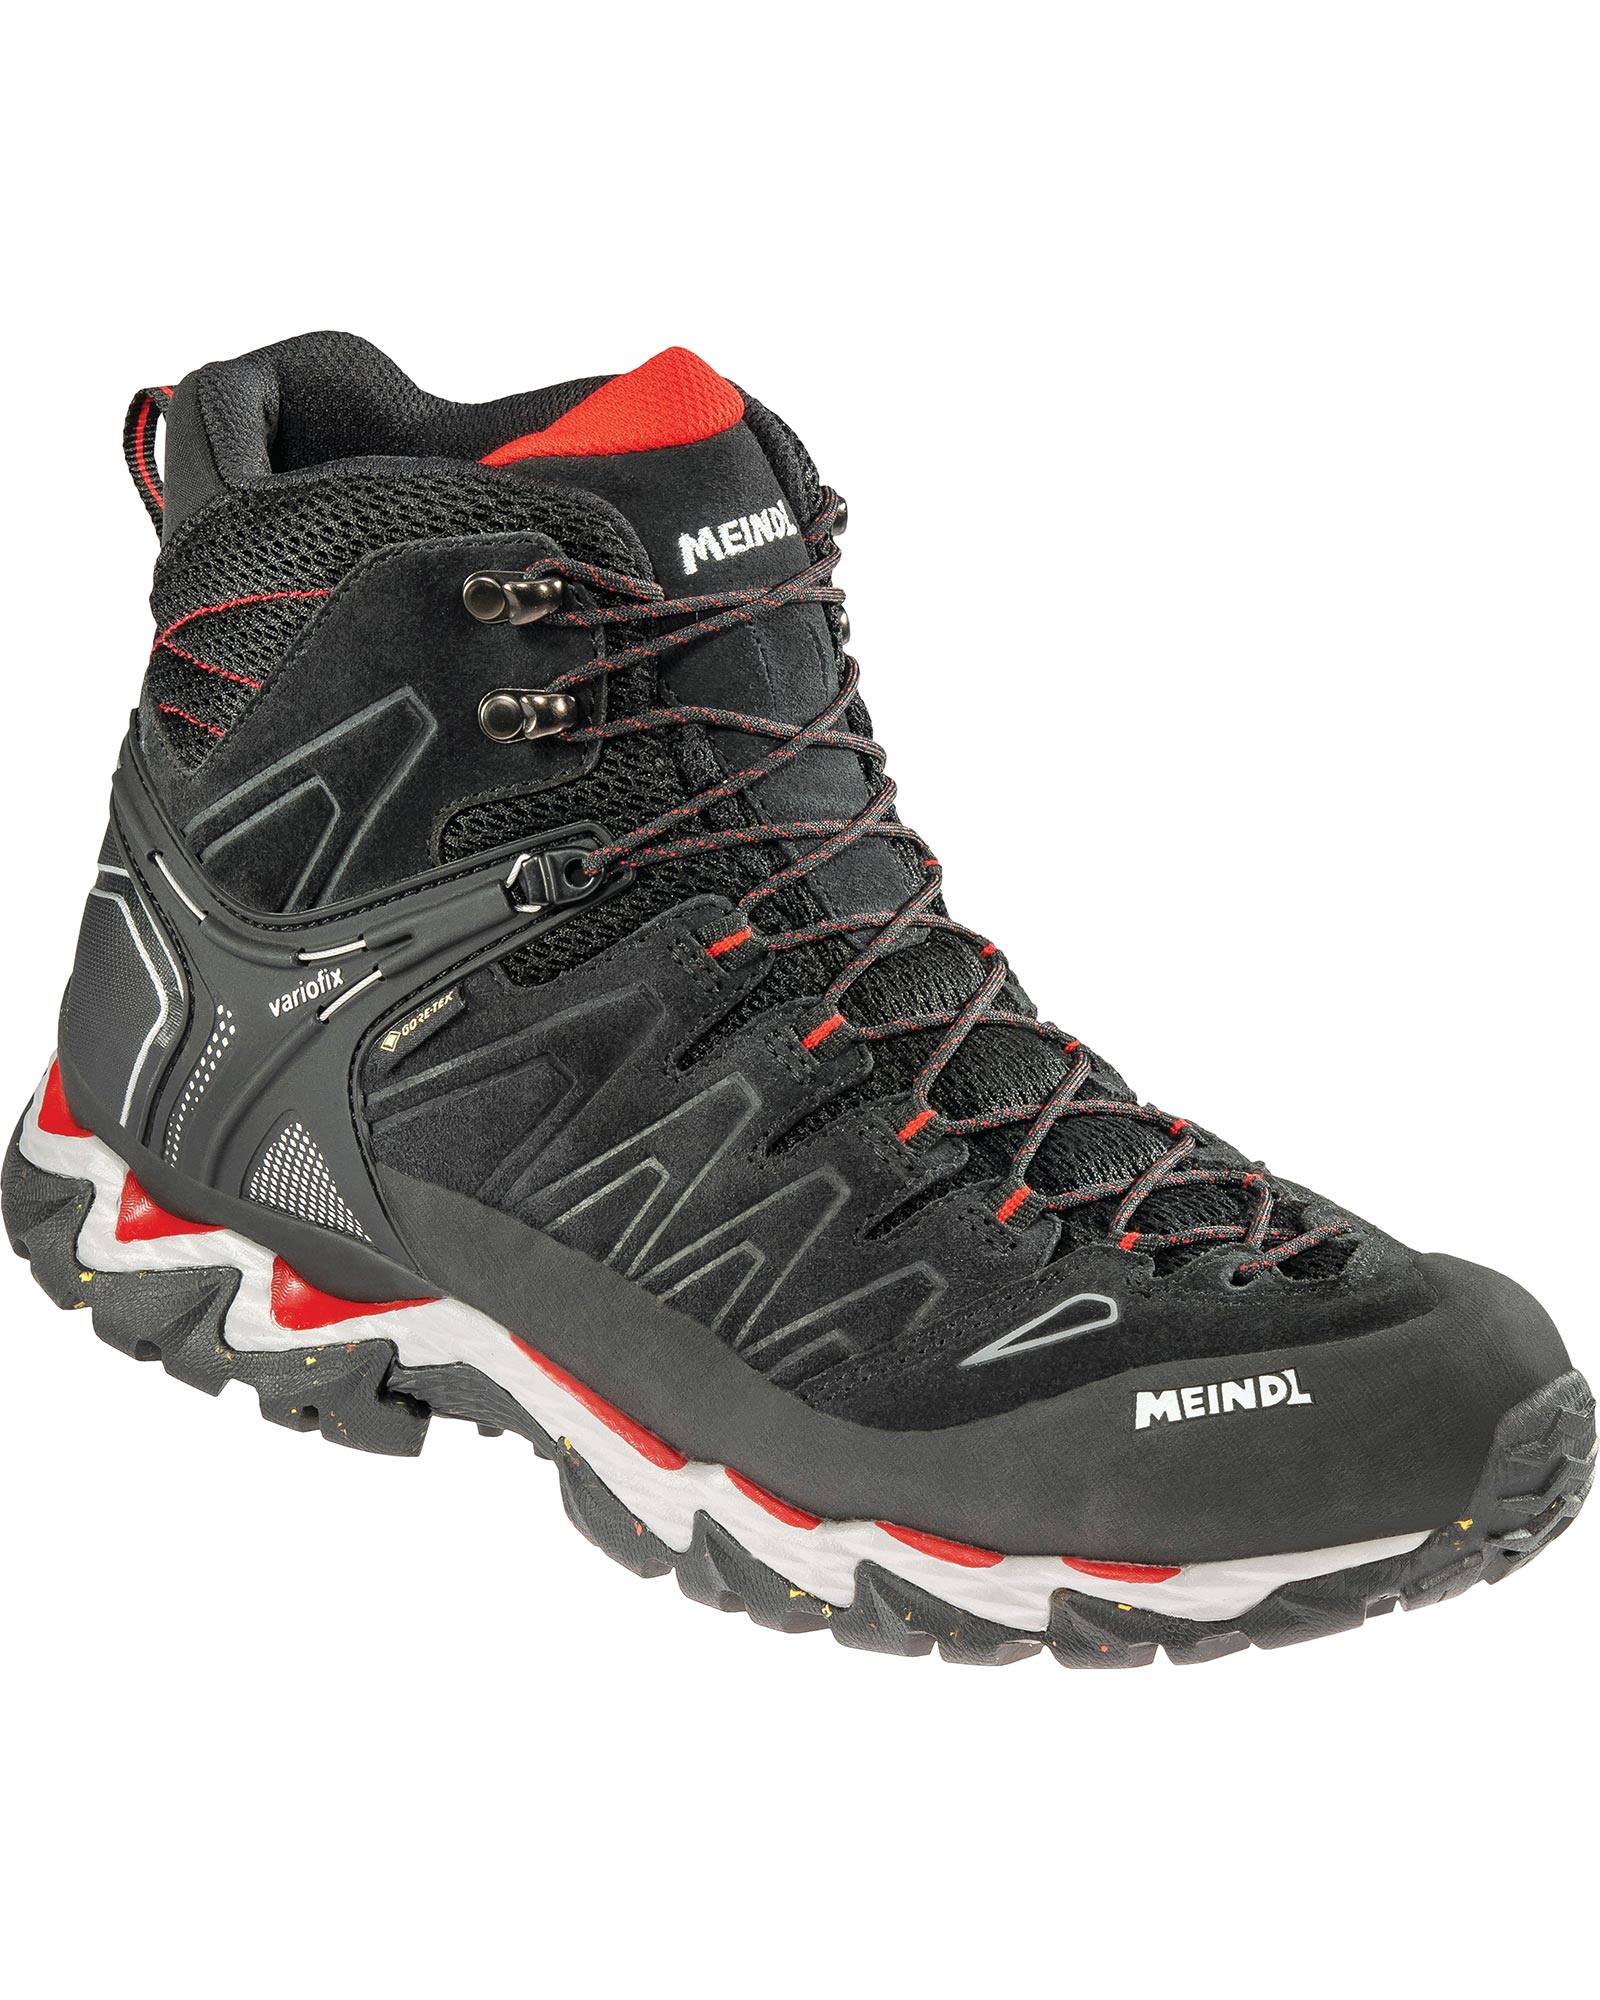 Meindl Lite Hike GORE TEX Men’s Boots - Black/Red UK 9.5